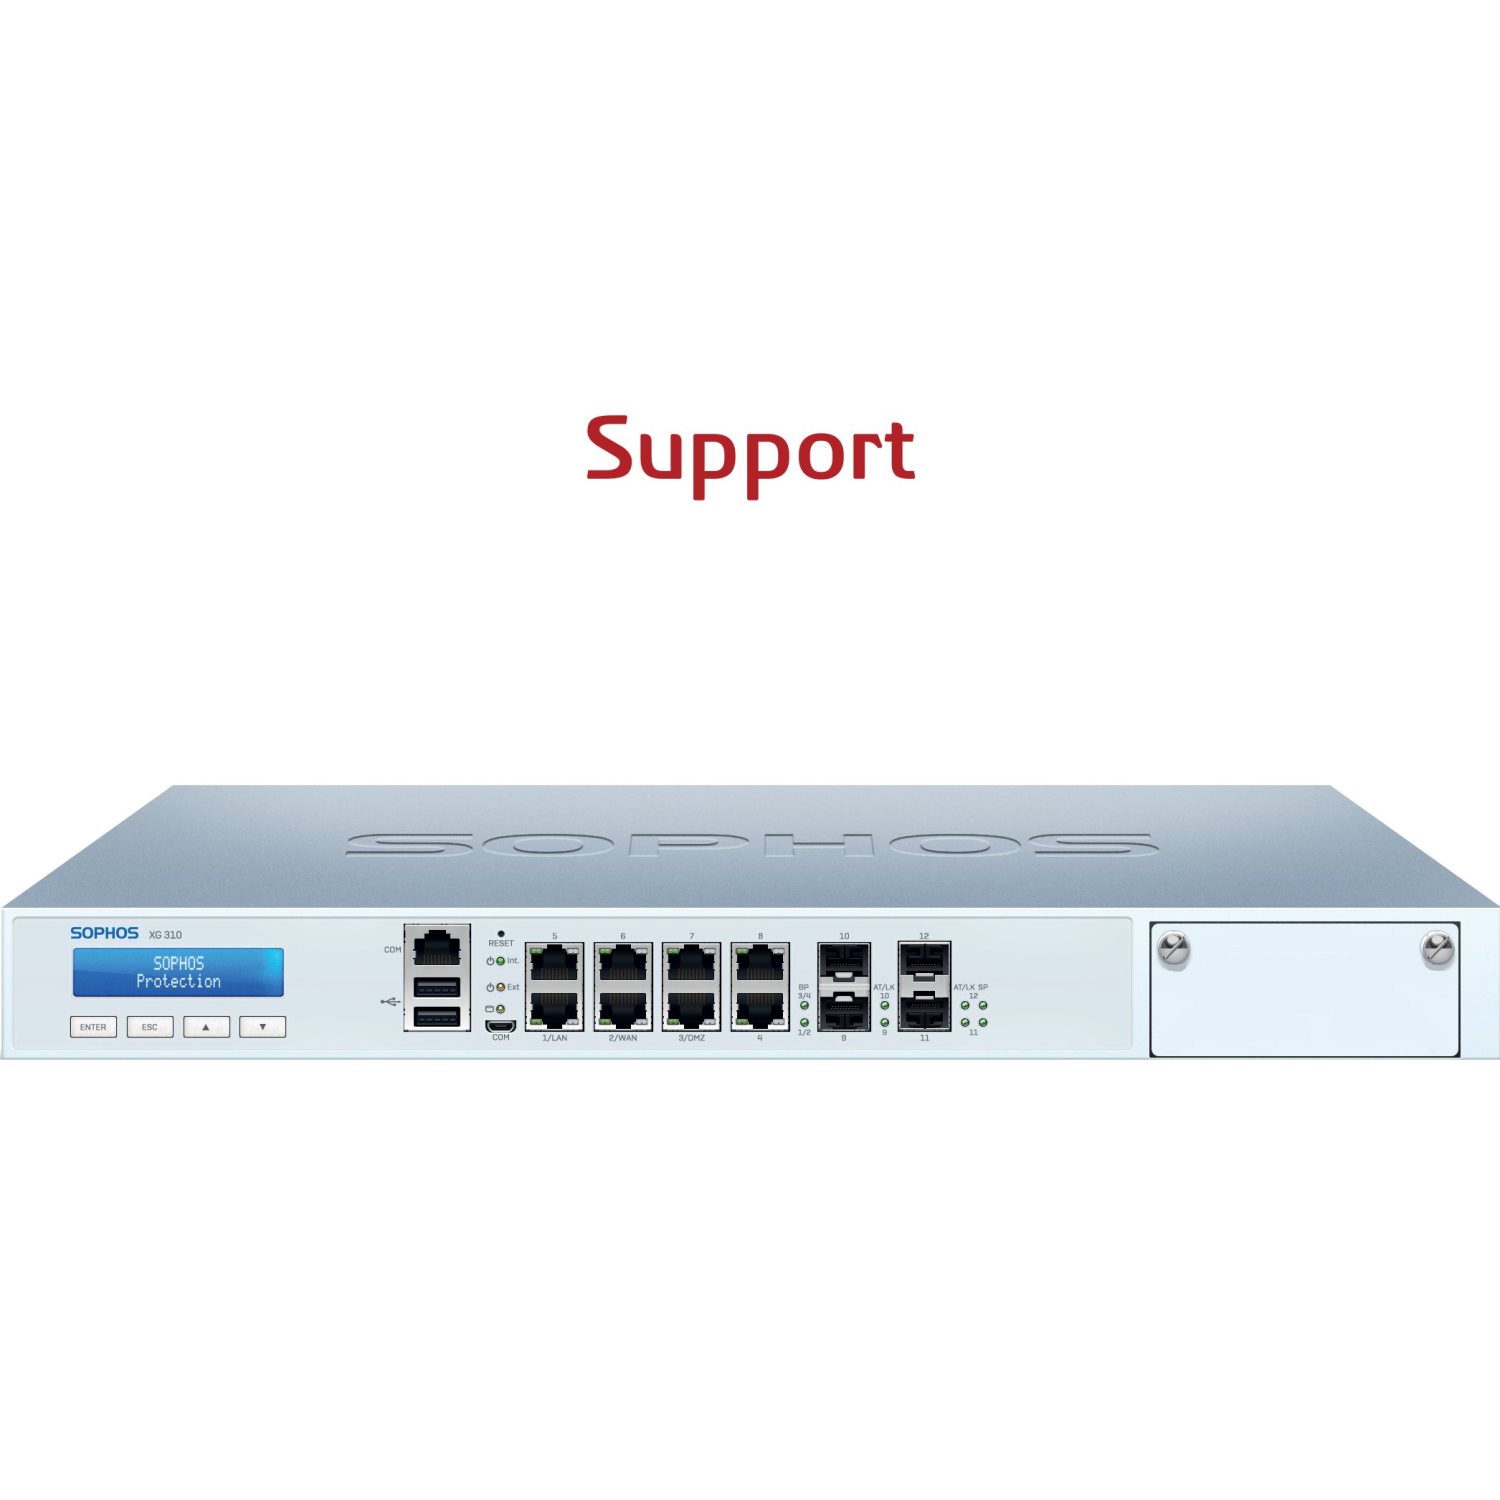  XG / XGS FireWall Support pour Firewall Sophos XG 310